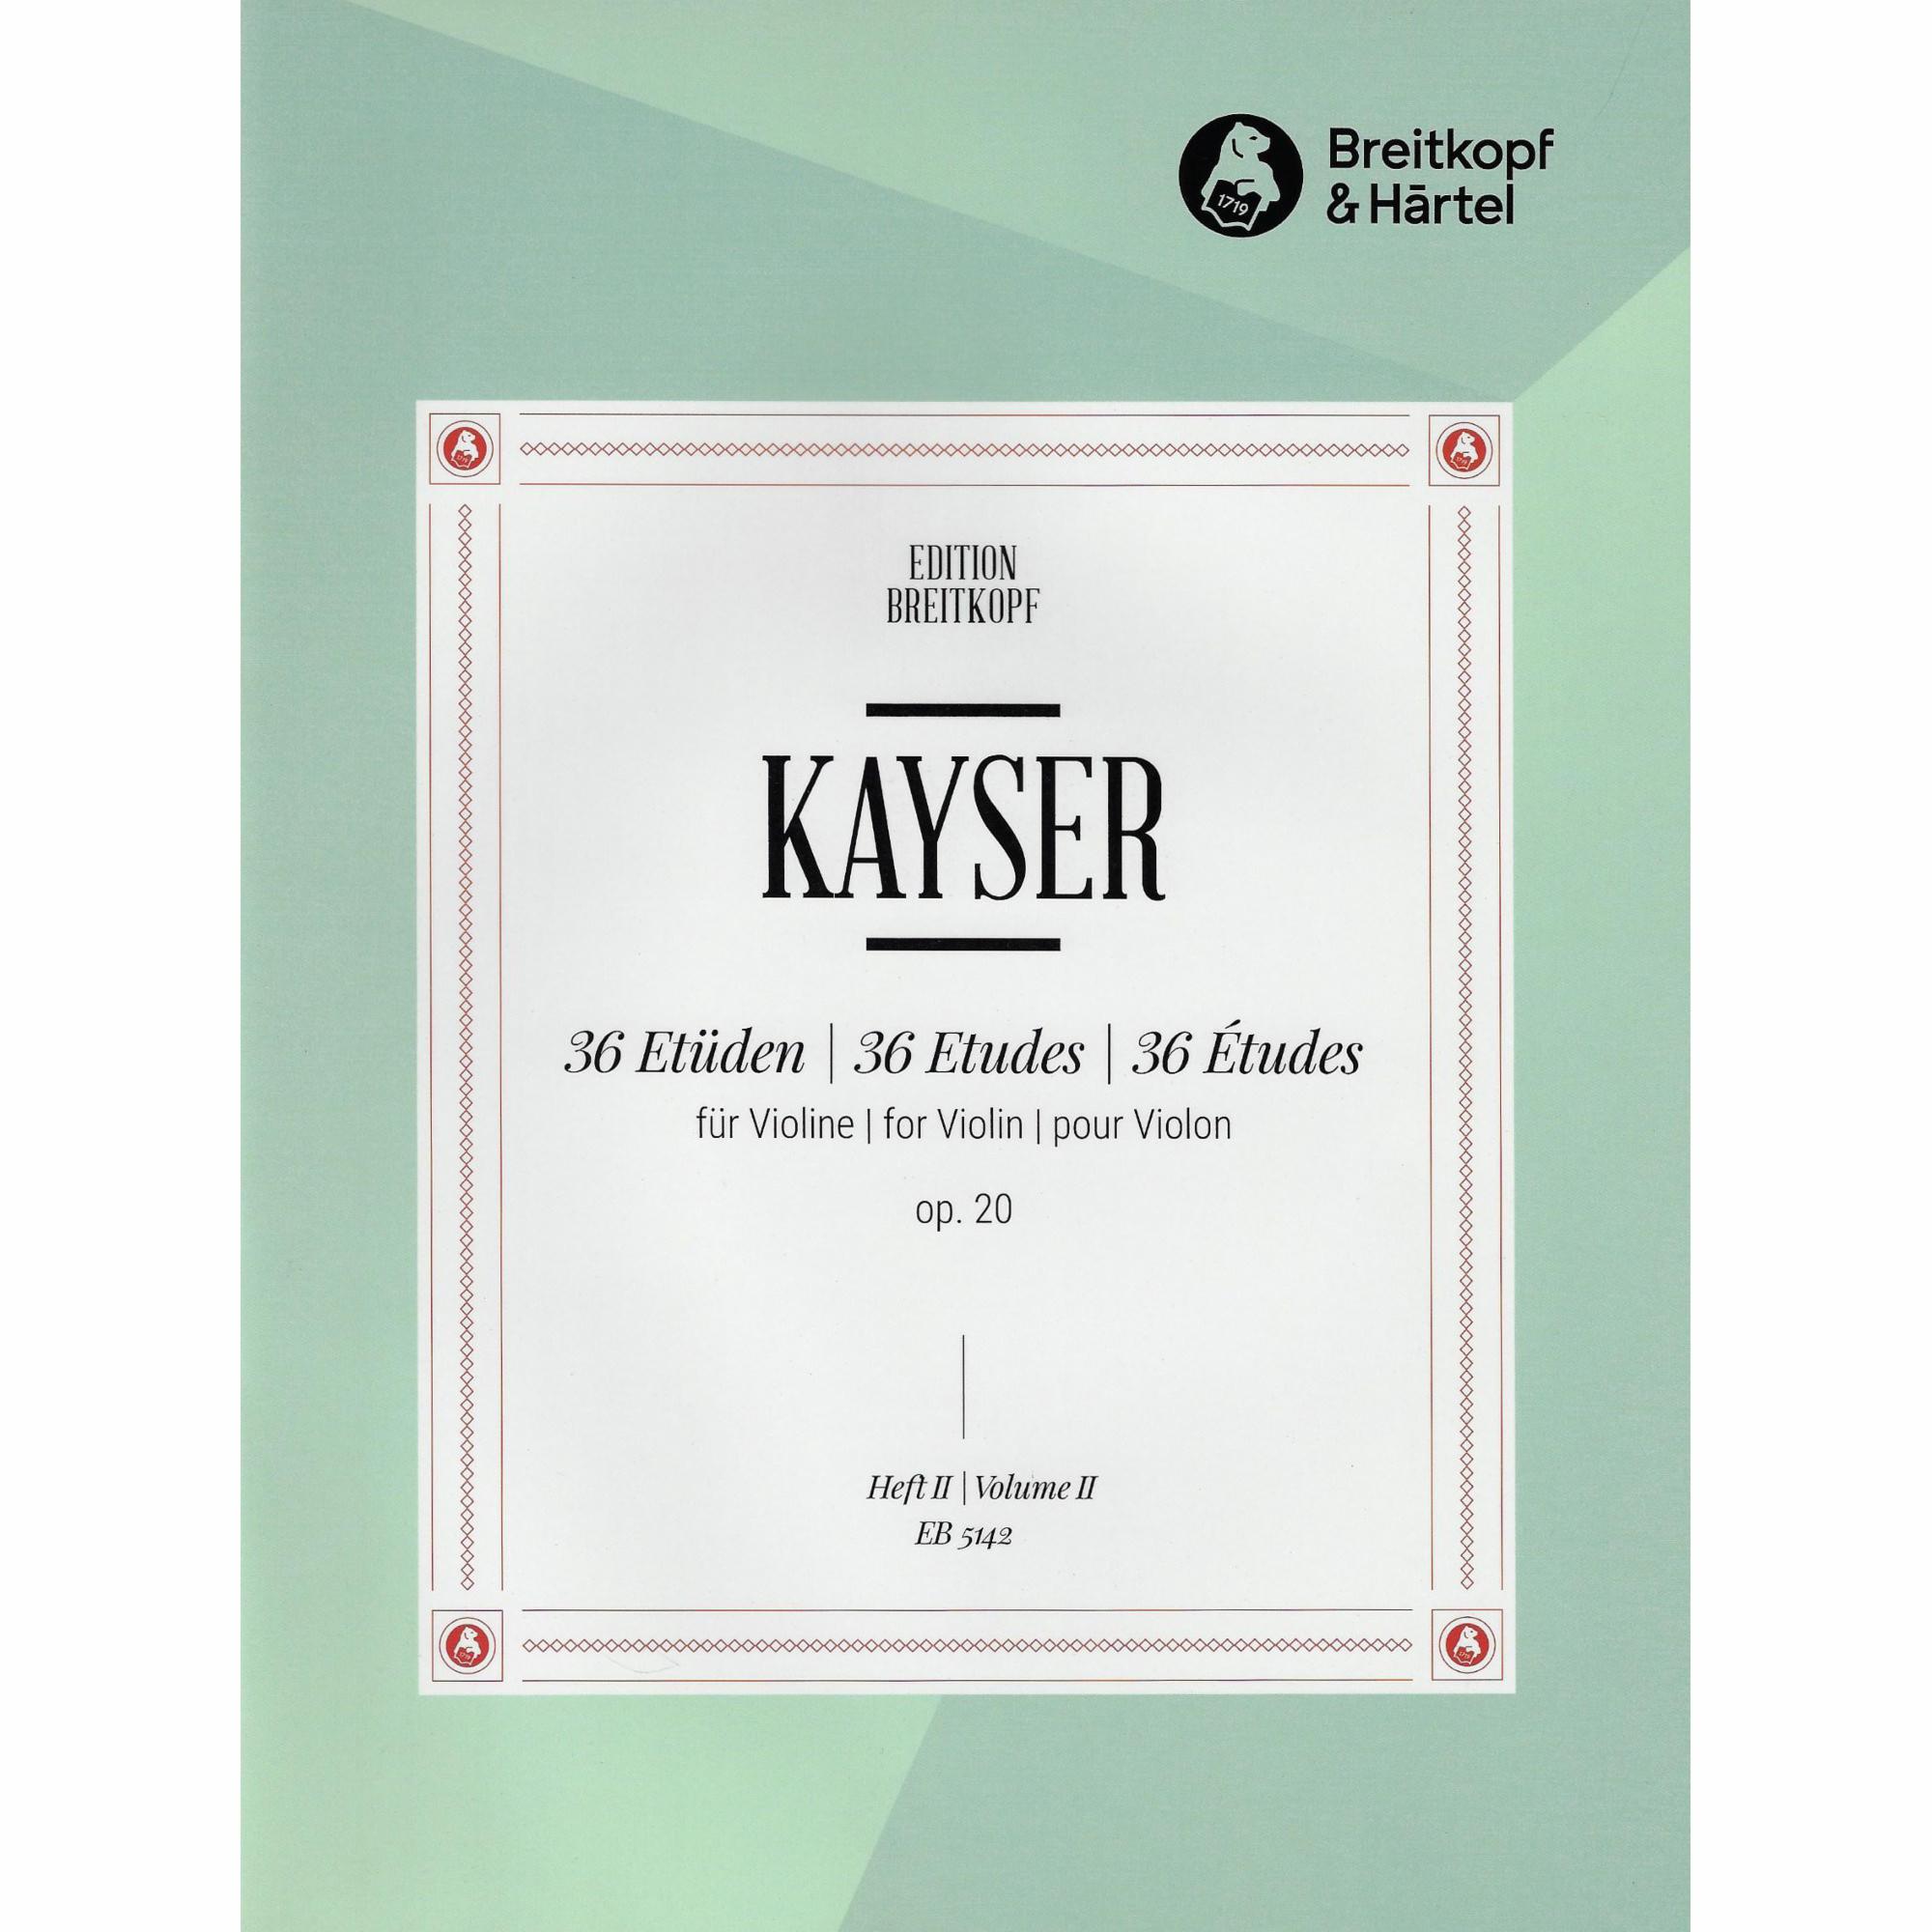 Kayser -- 36 Studies, Op. 20, Books 1-3 for Violin